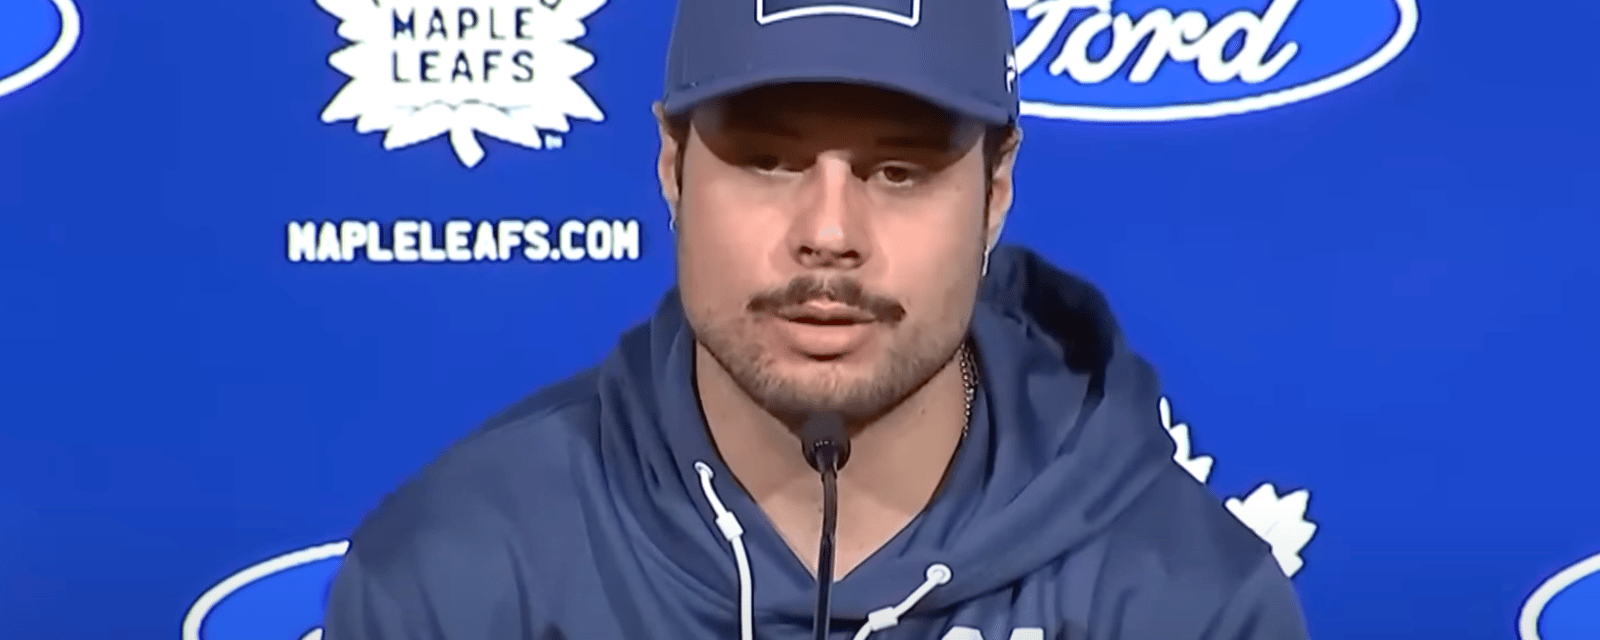 Maple Leafs send Auston Matthews home from practice 